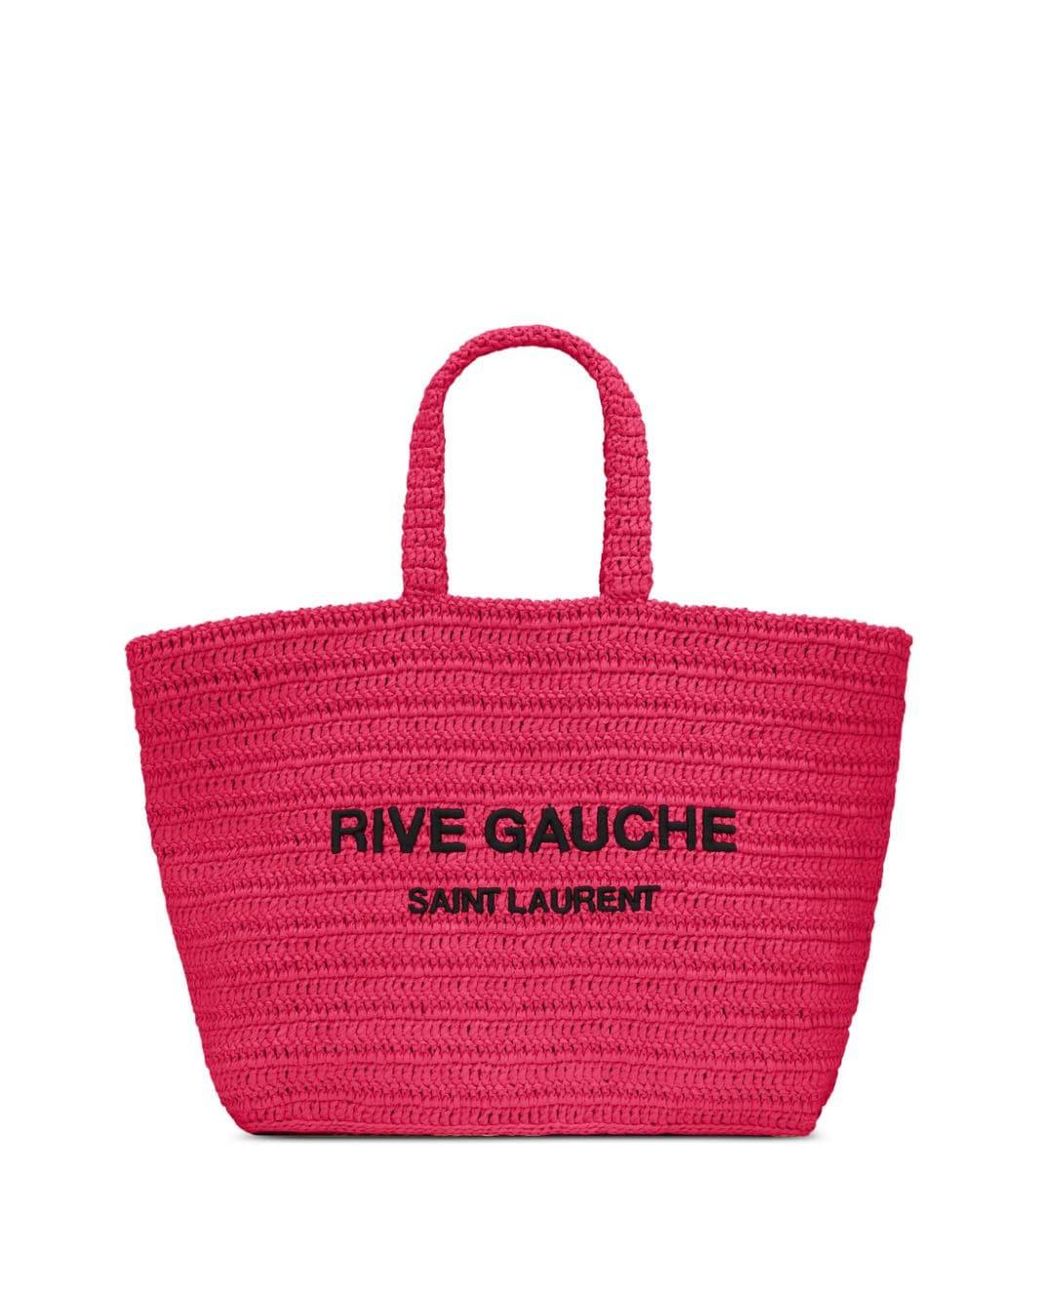 Saint Laurent Rive Gauche Large Top Handle Bag in Natural